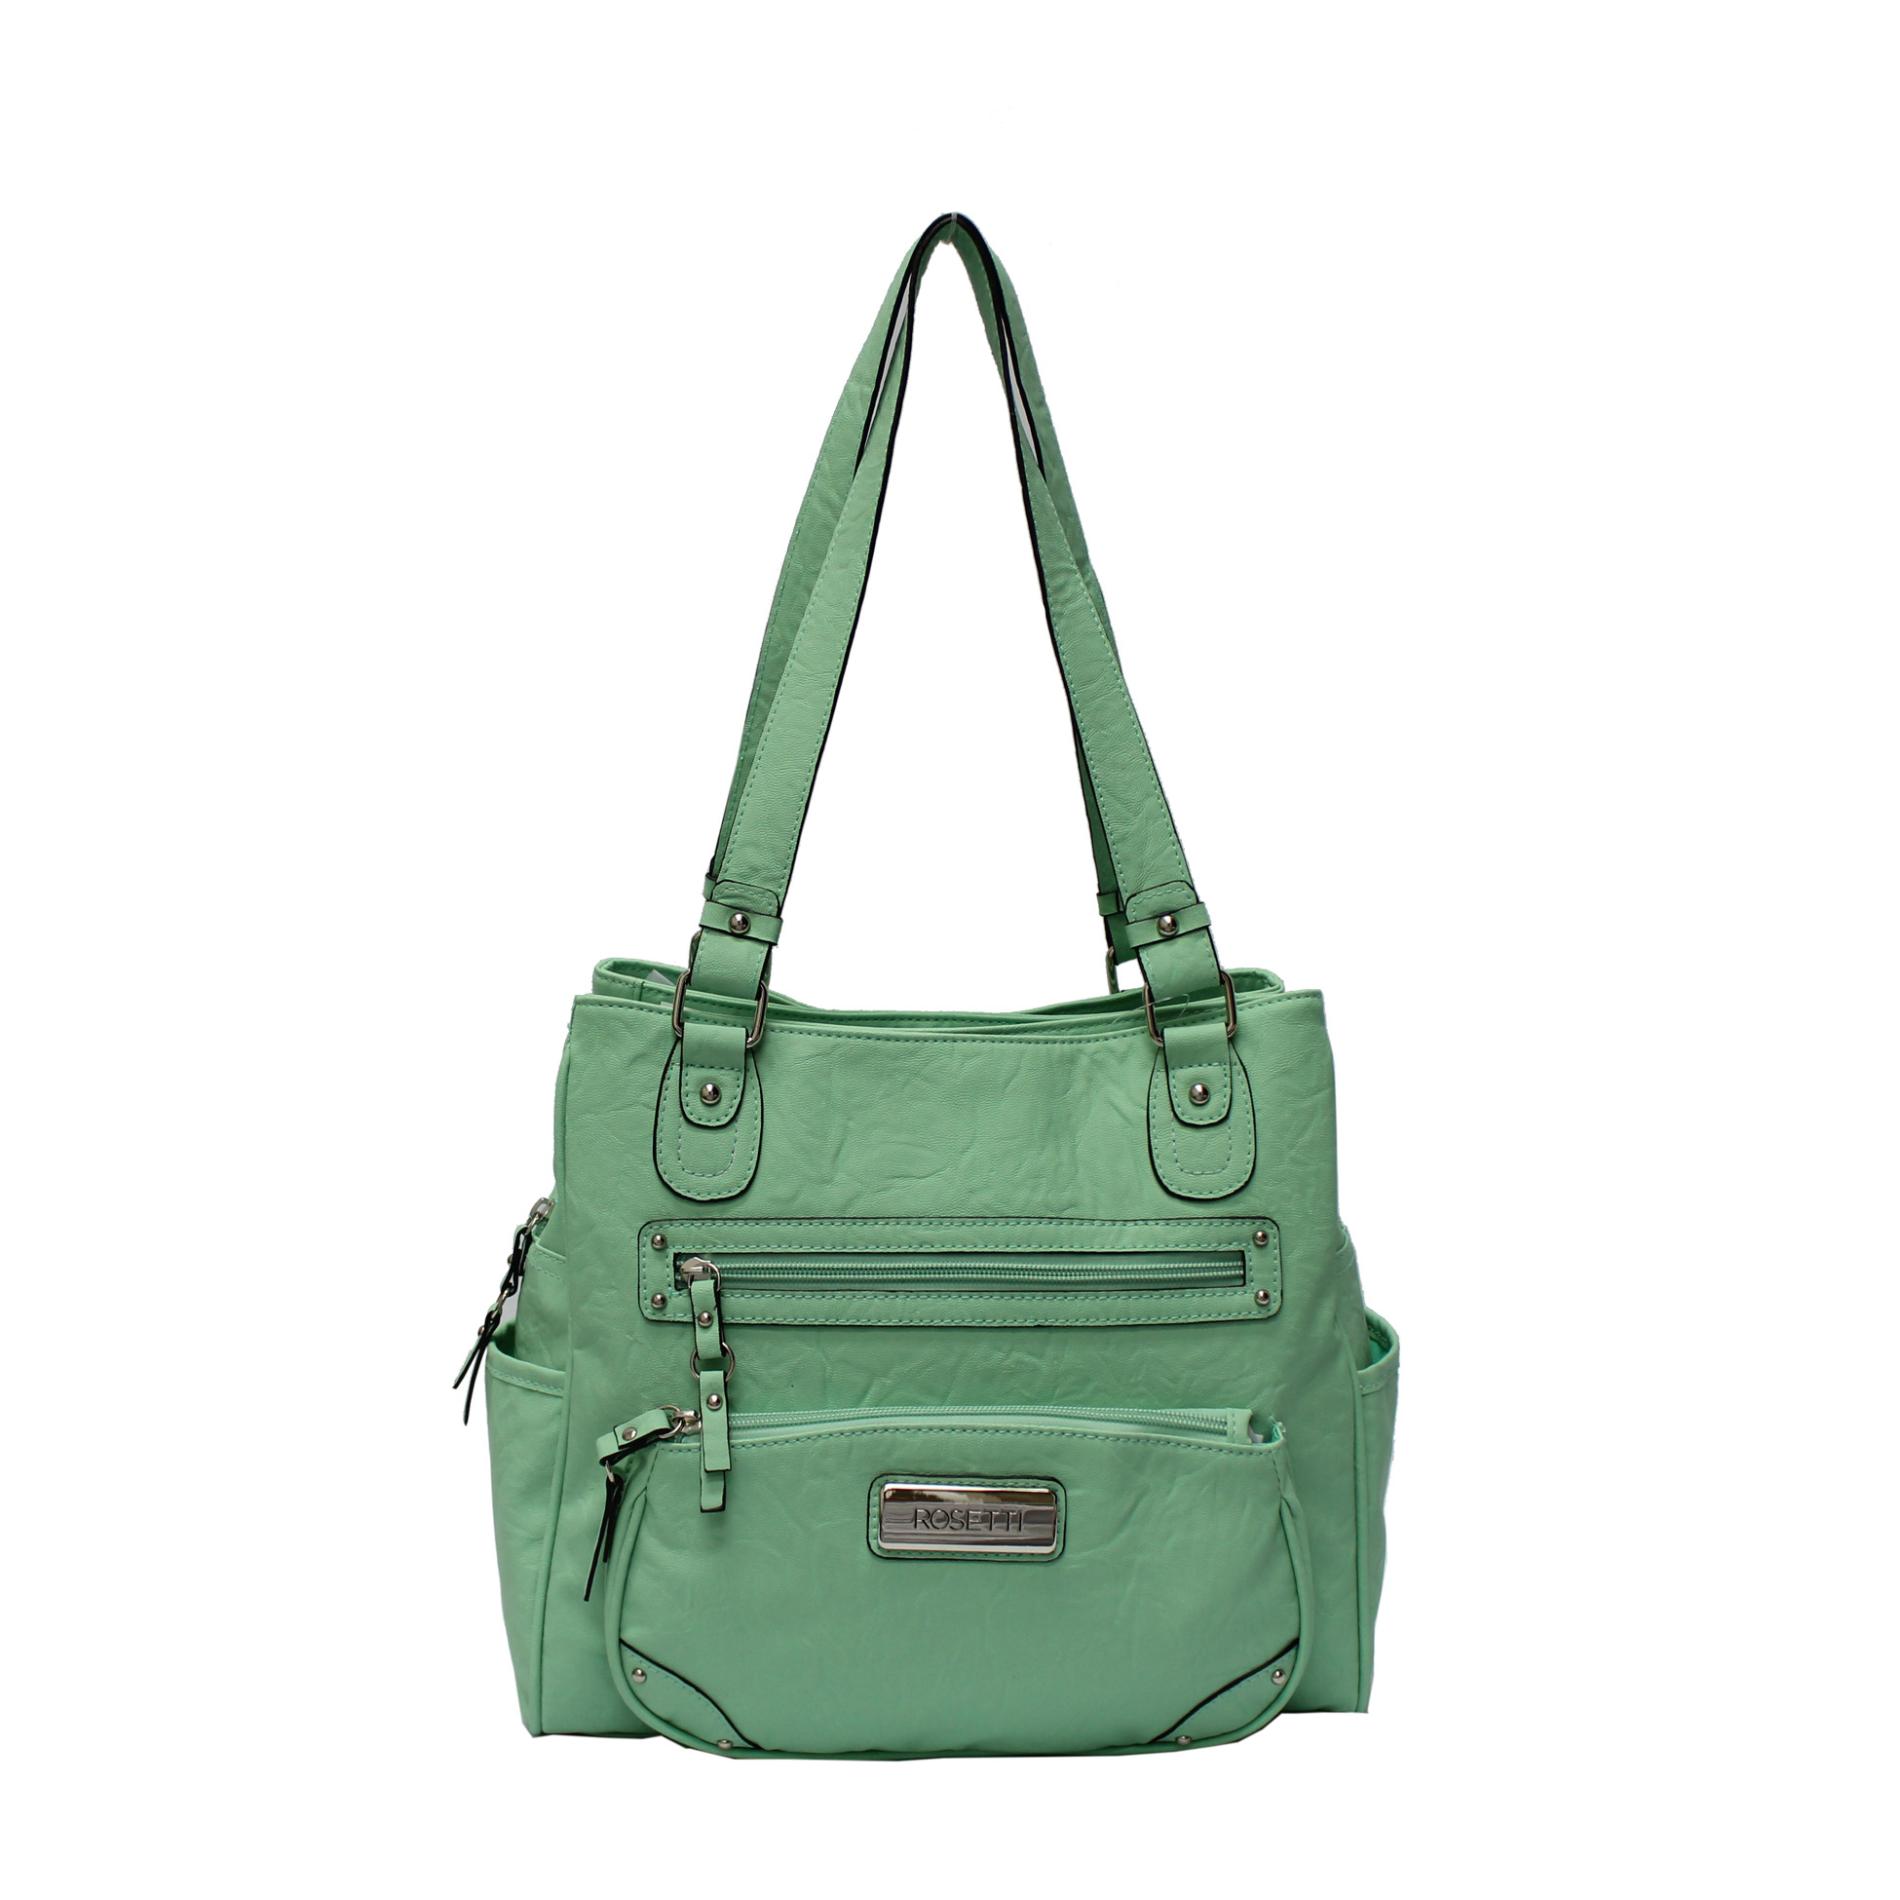 Rosetti Women's On The Brink Shopper Handbag